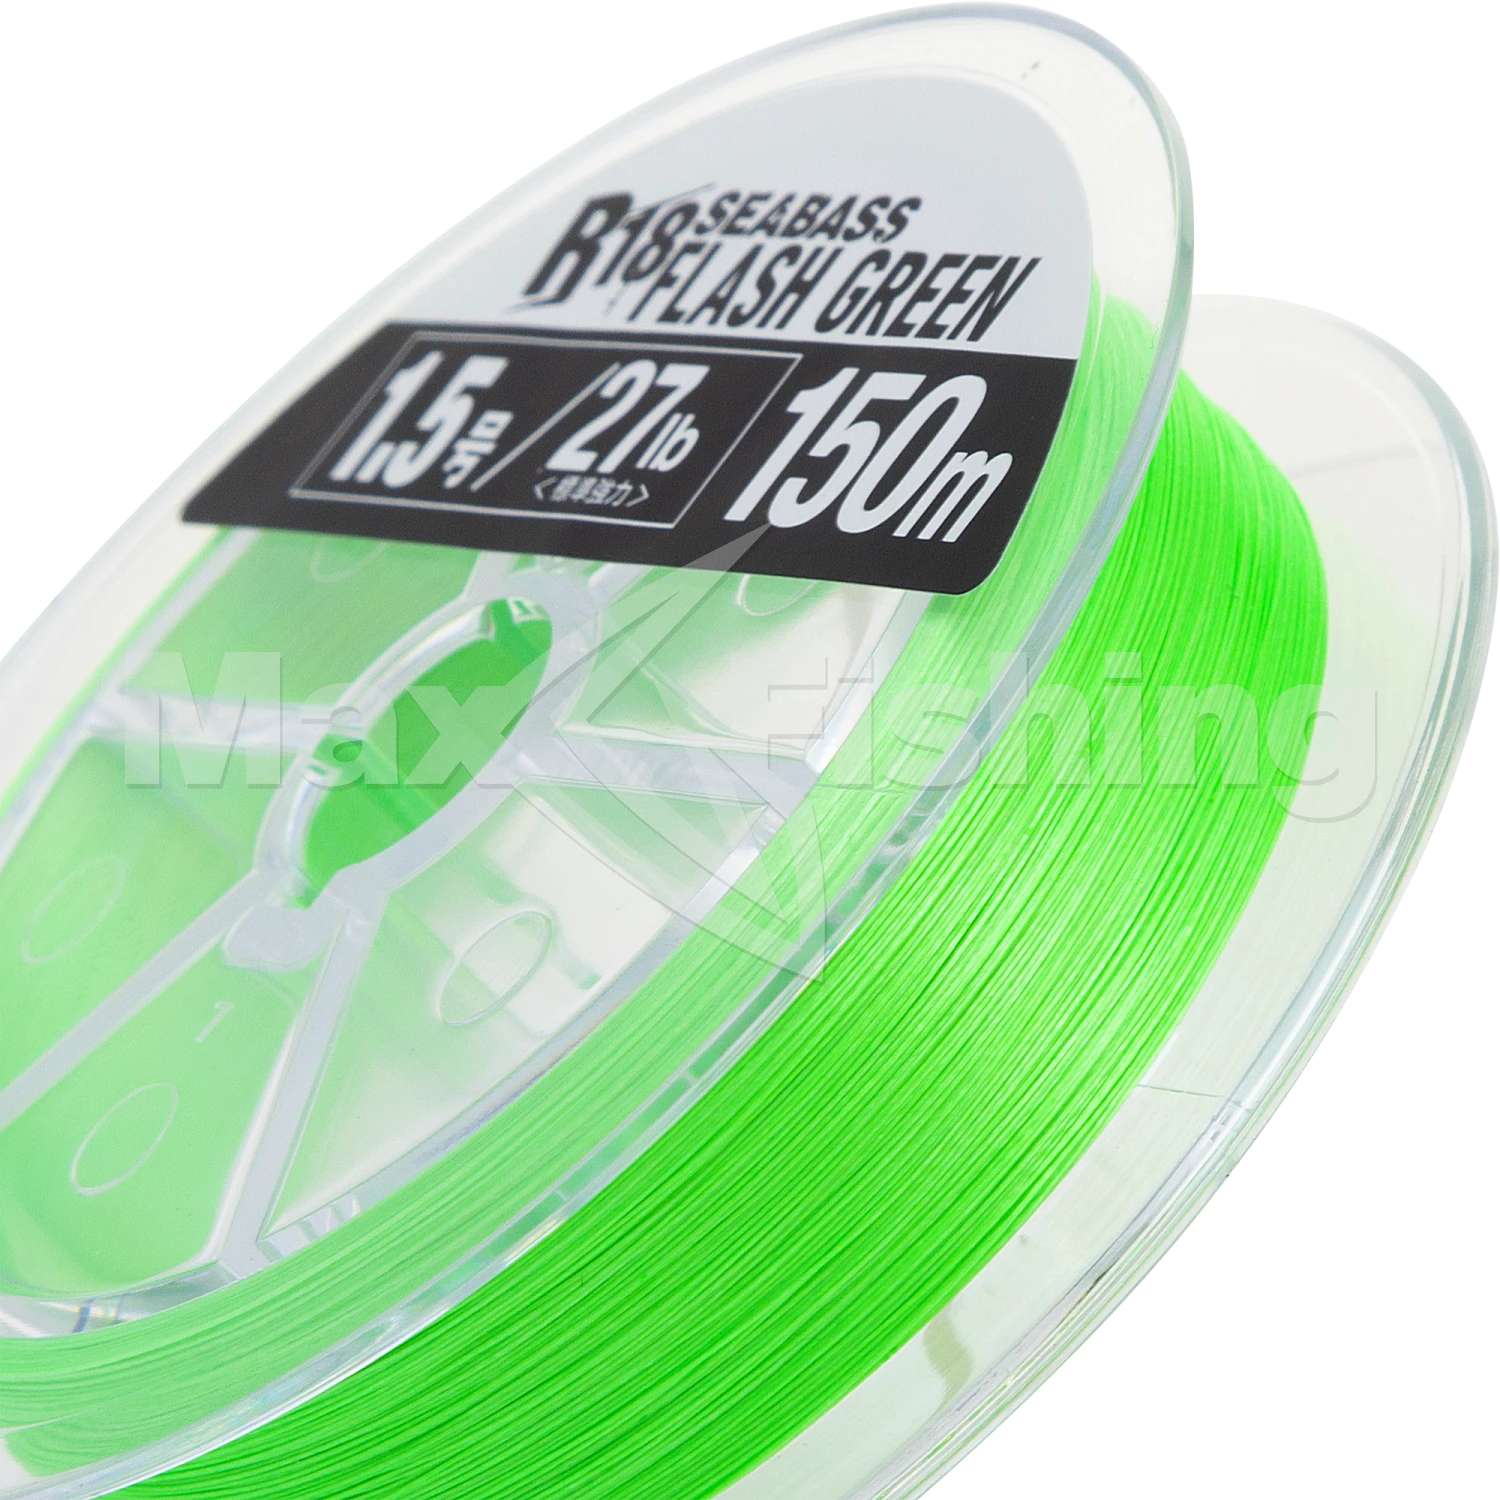 Шнур плетеный Seaguar R-18 Kanzen Seabass PE X8 #1,5 0,205мм 150м (flash green)